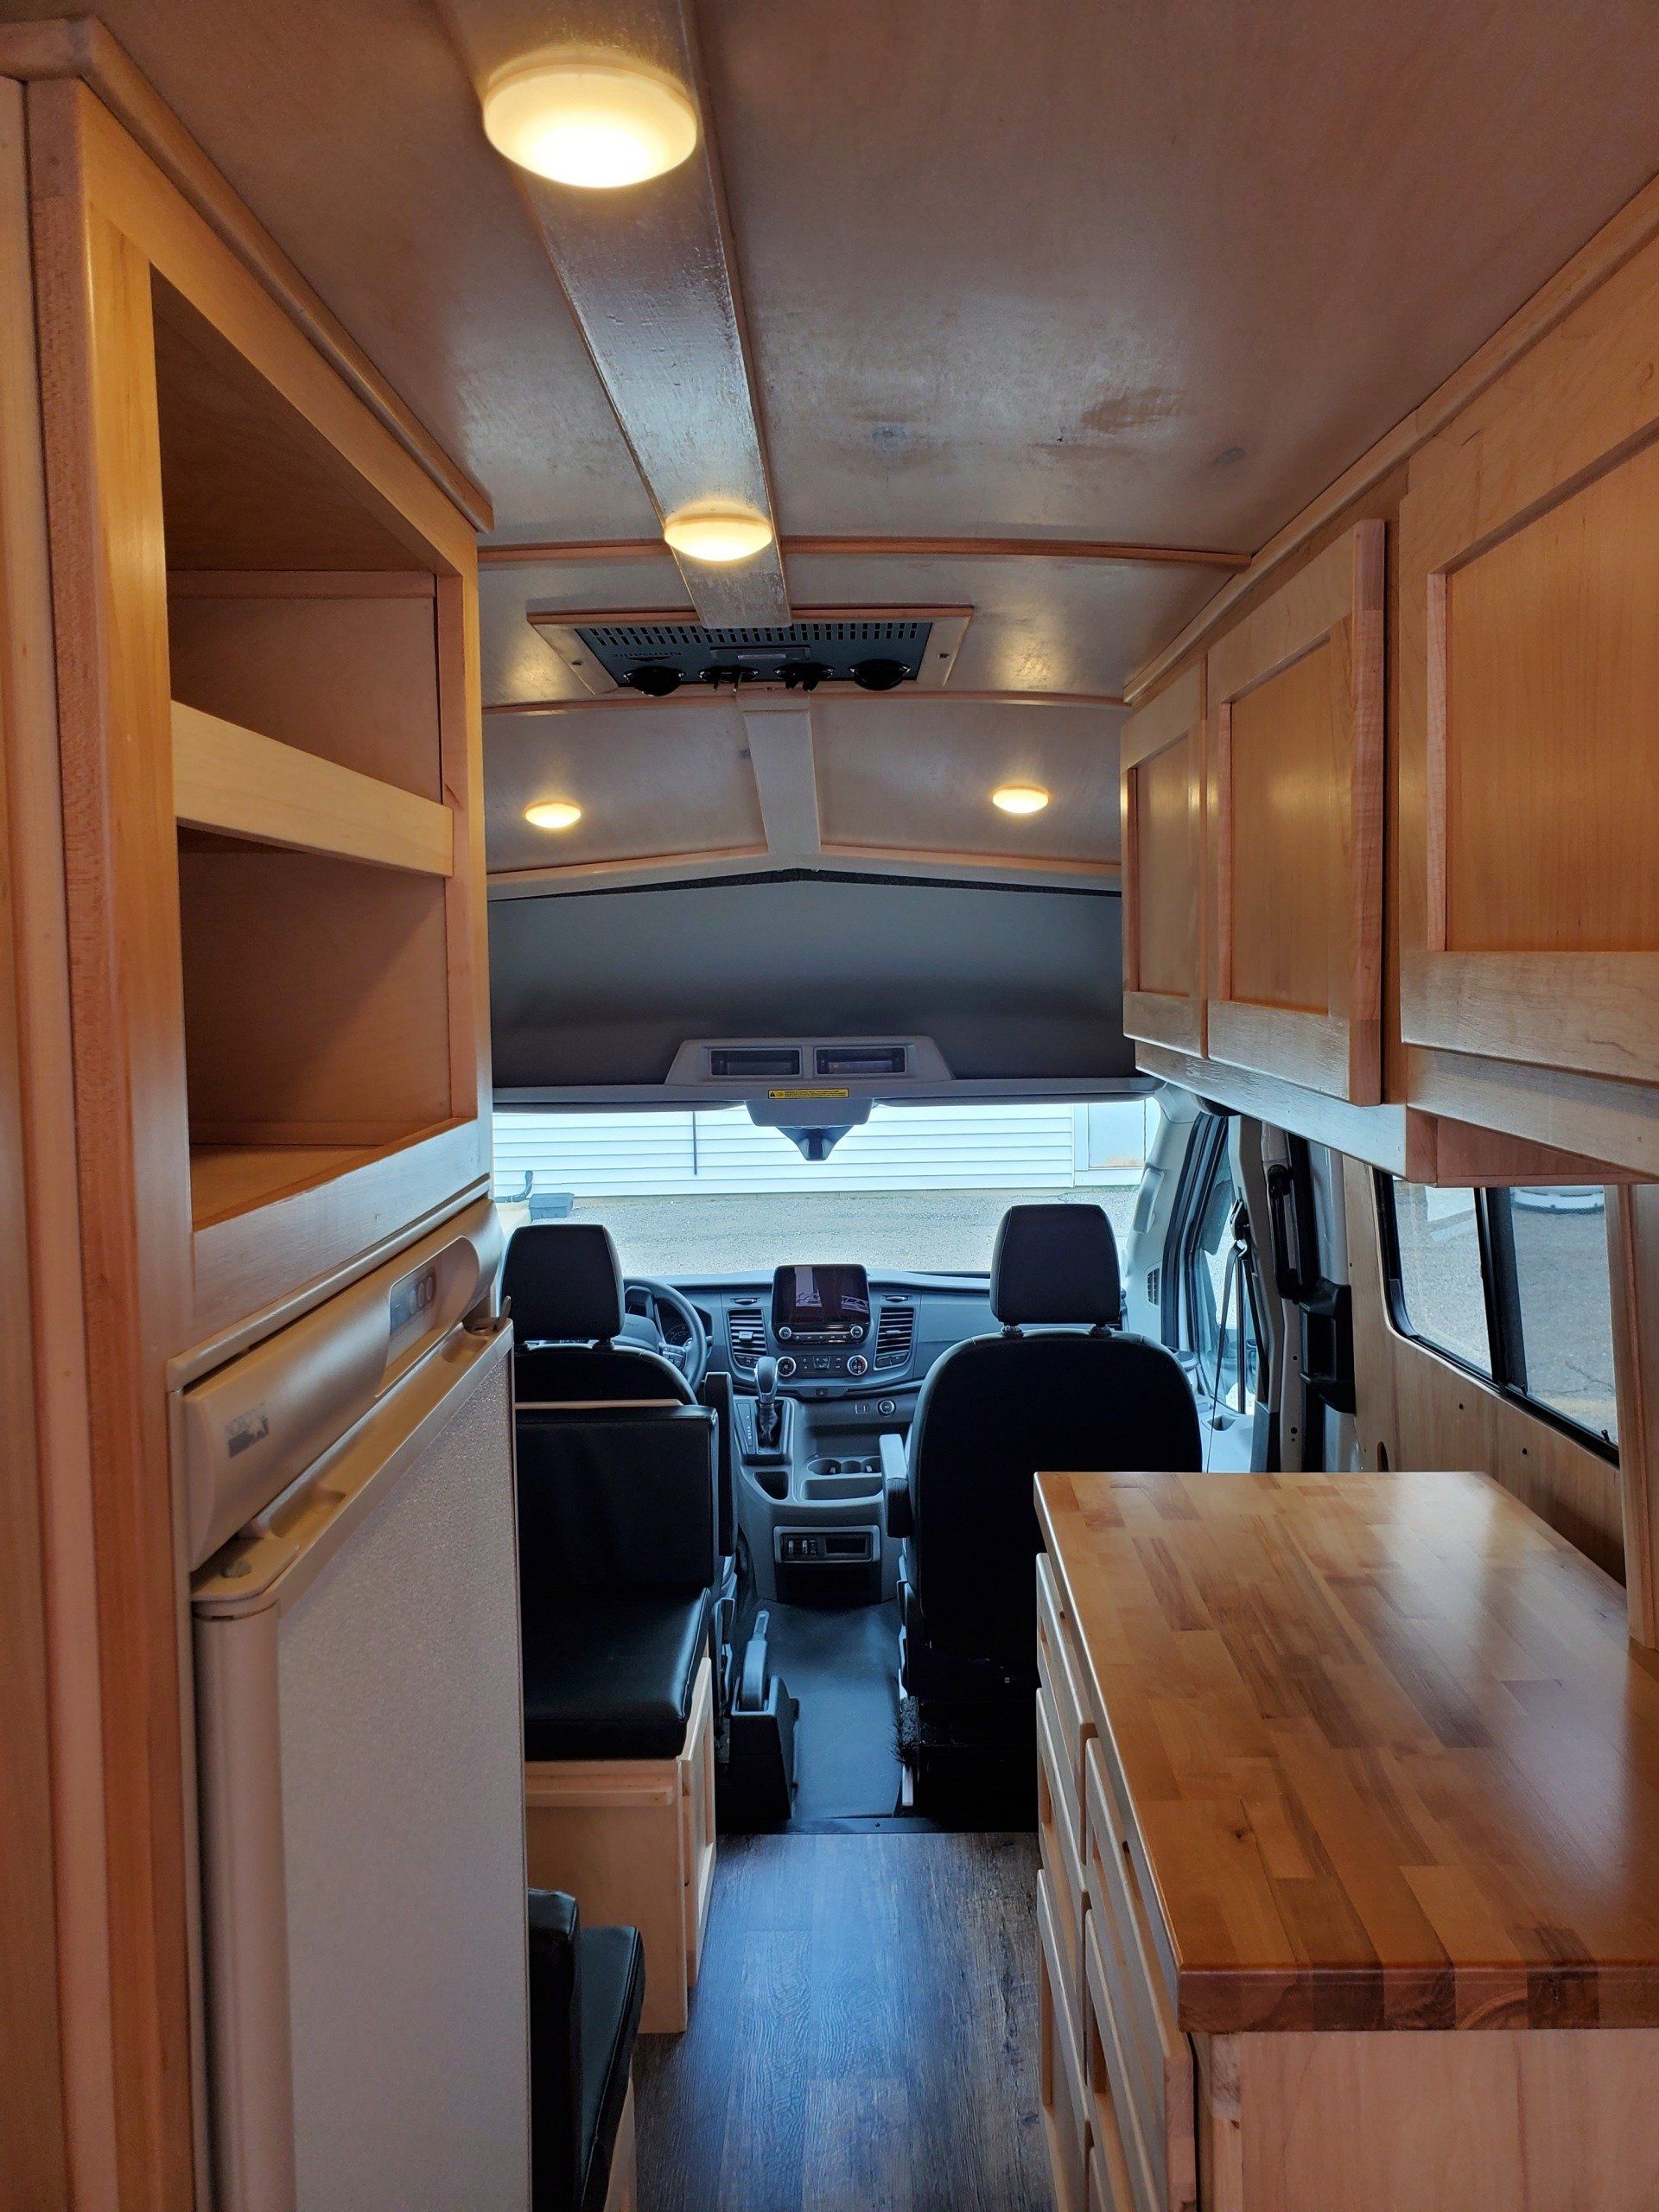 Inside Camper Van - Milton, NH  - RV Service and R & L Van Builds